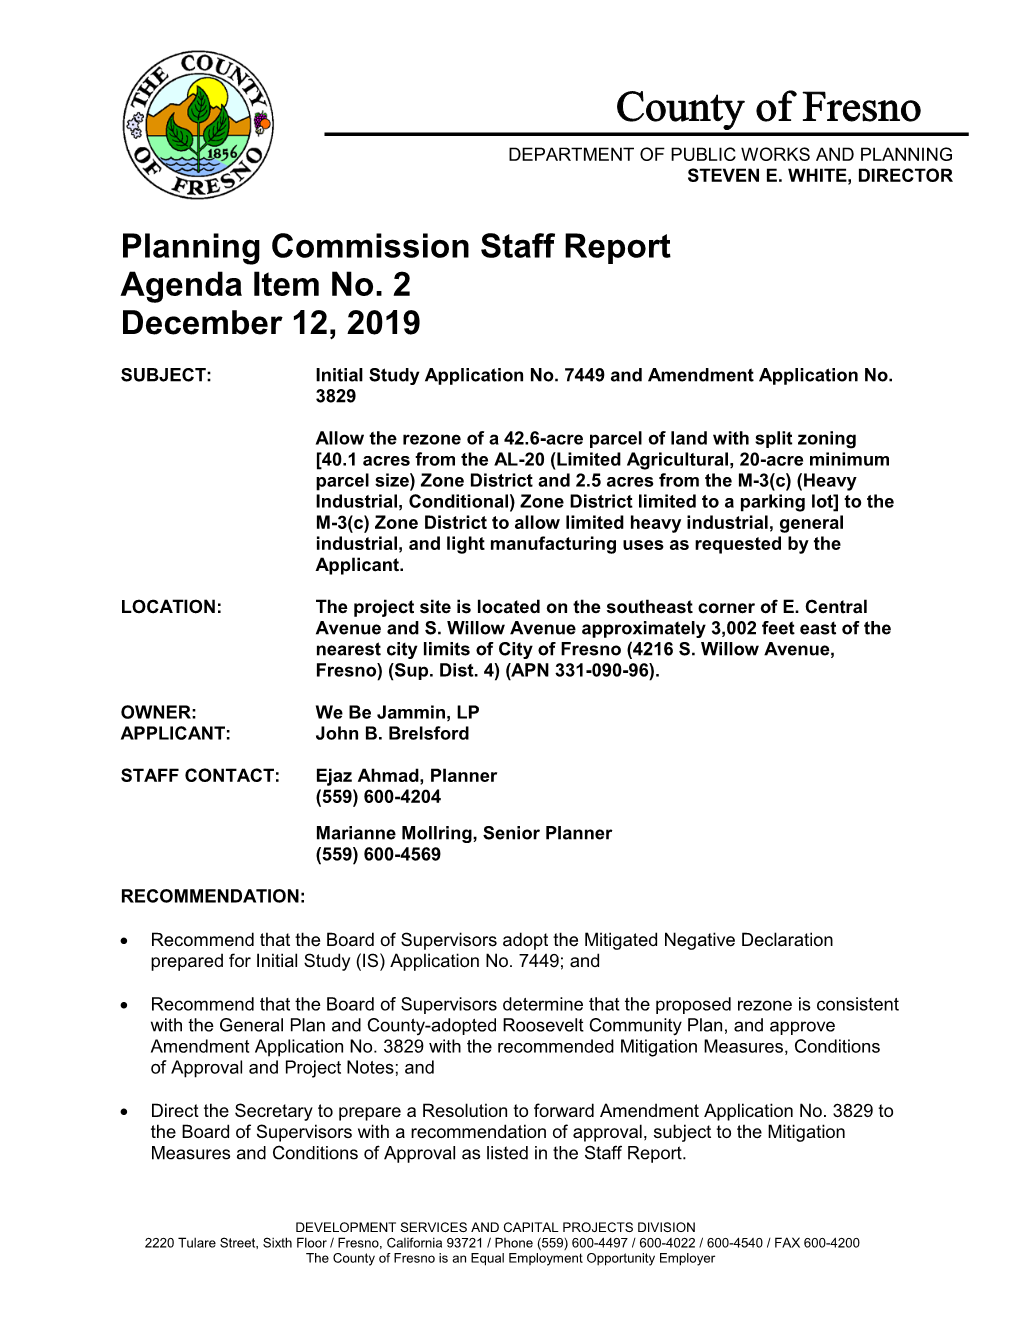 Planning Commission Staff Report Agenda Item No. 2 December 12, 2019